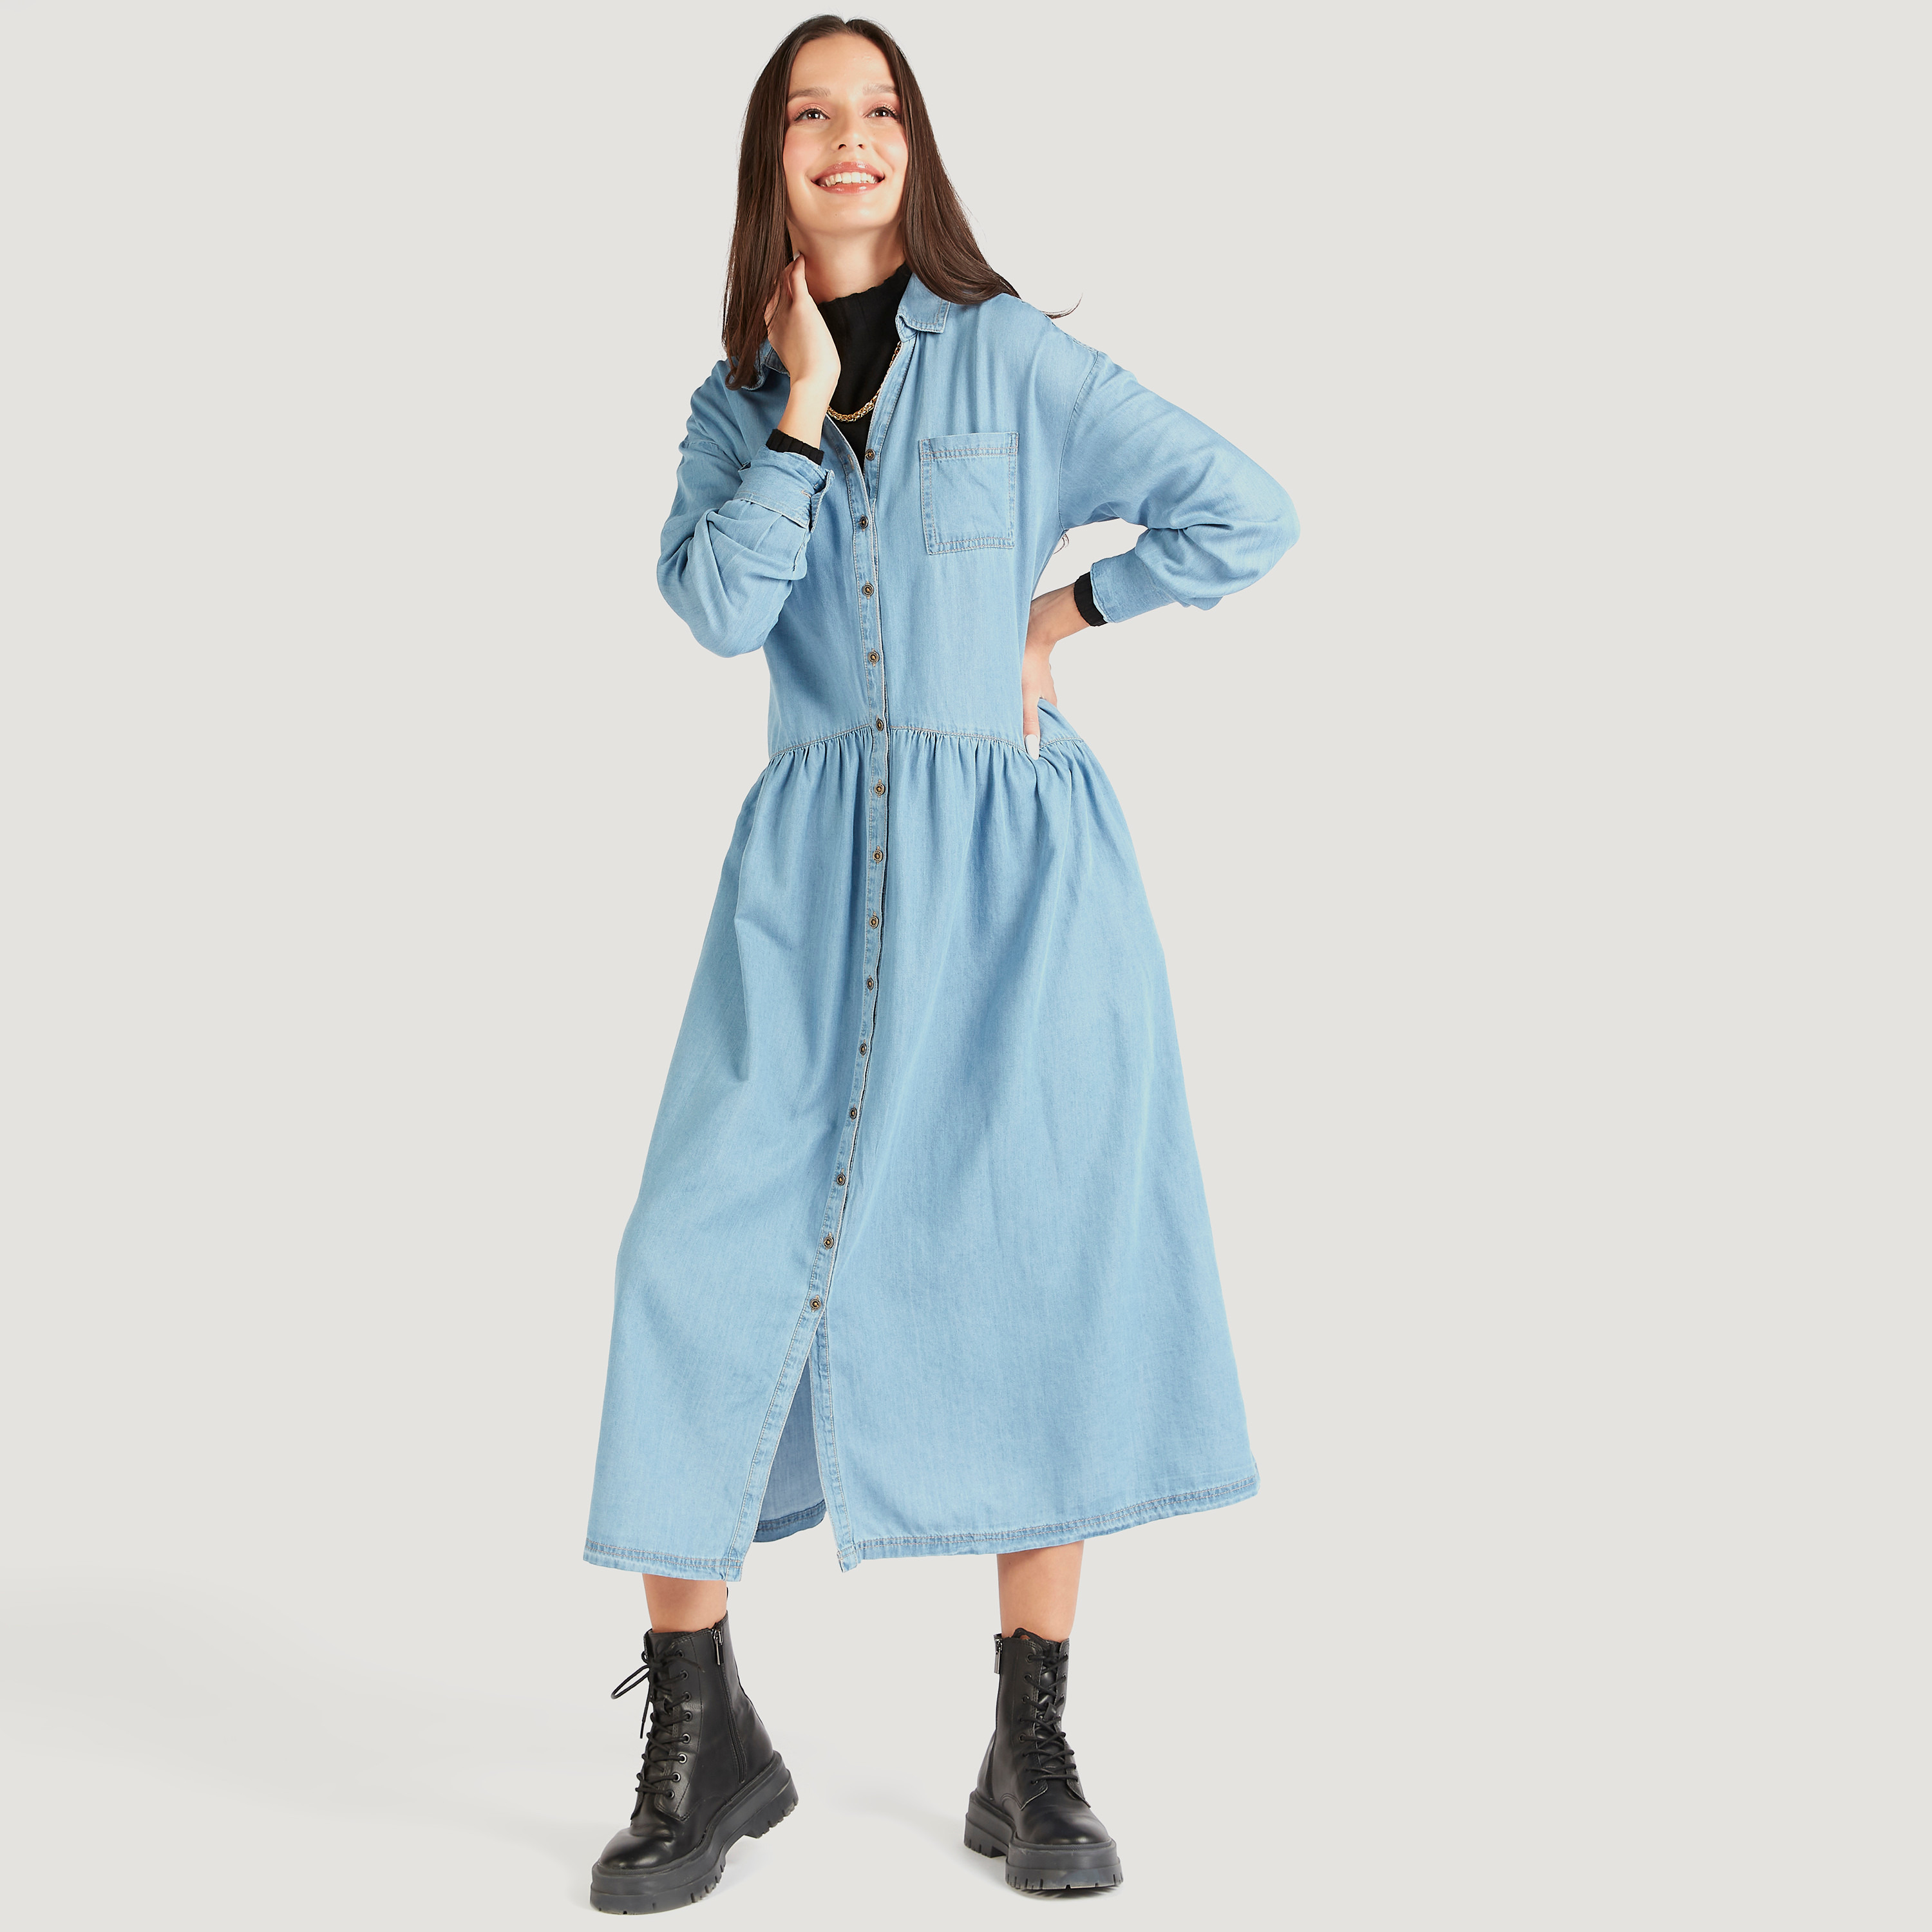 Fall Fashion Girls Denim Denim Dress Small And Medium Sizes, Long Sleeve,  Lapel Pocket, Single Breasted Q0716 From Sihuai04, $10.74 | DHgate.Com